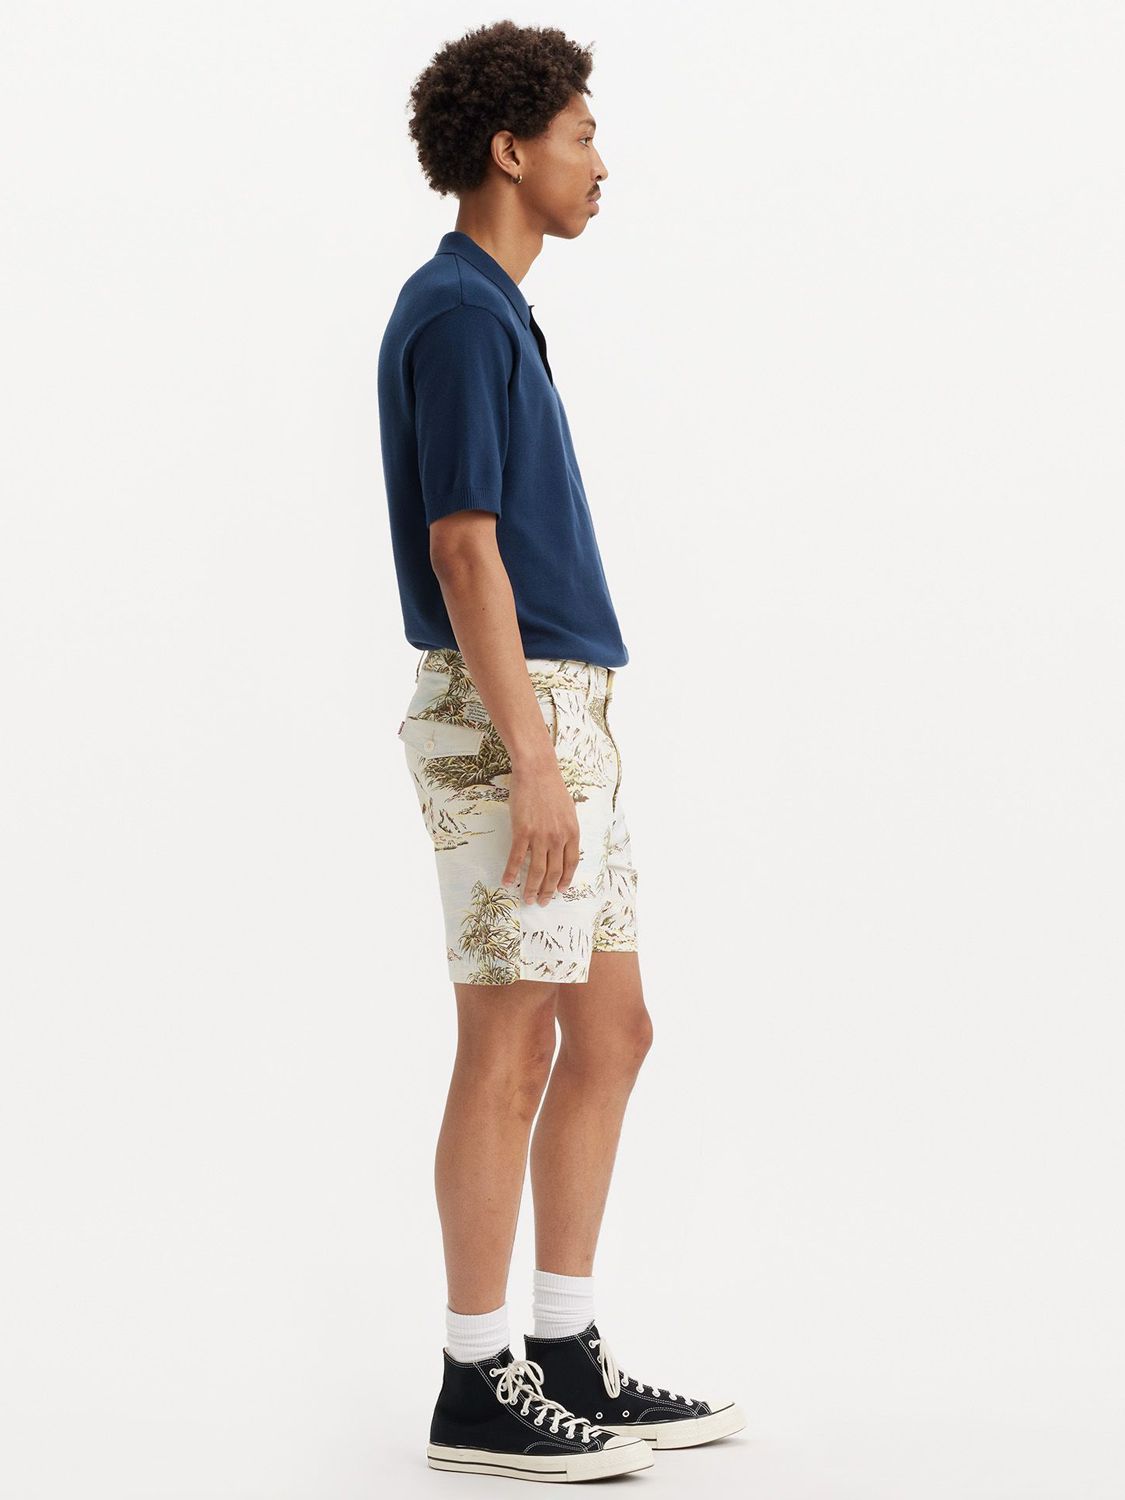 Levi's Authentic Shorts, Natural/Multi, 30R